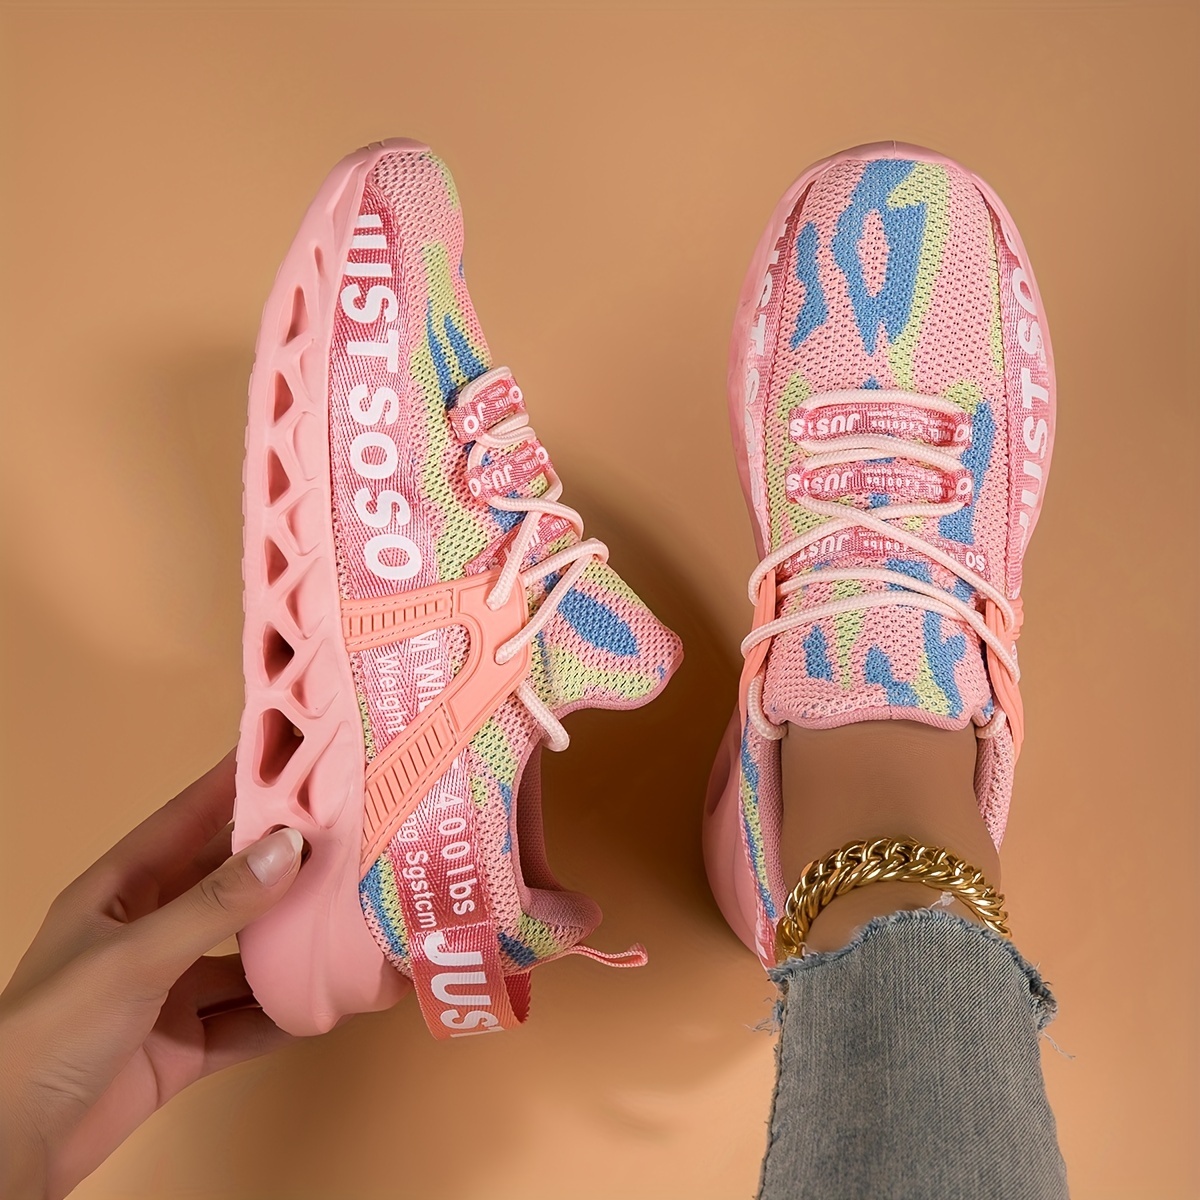 Zapatillas ON Running Cloud Rosa Para Mujer